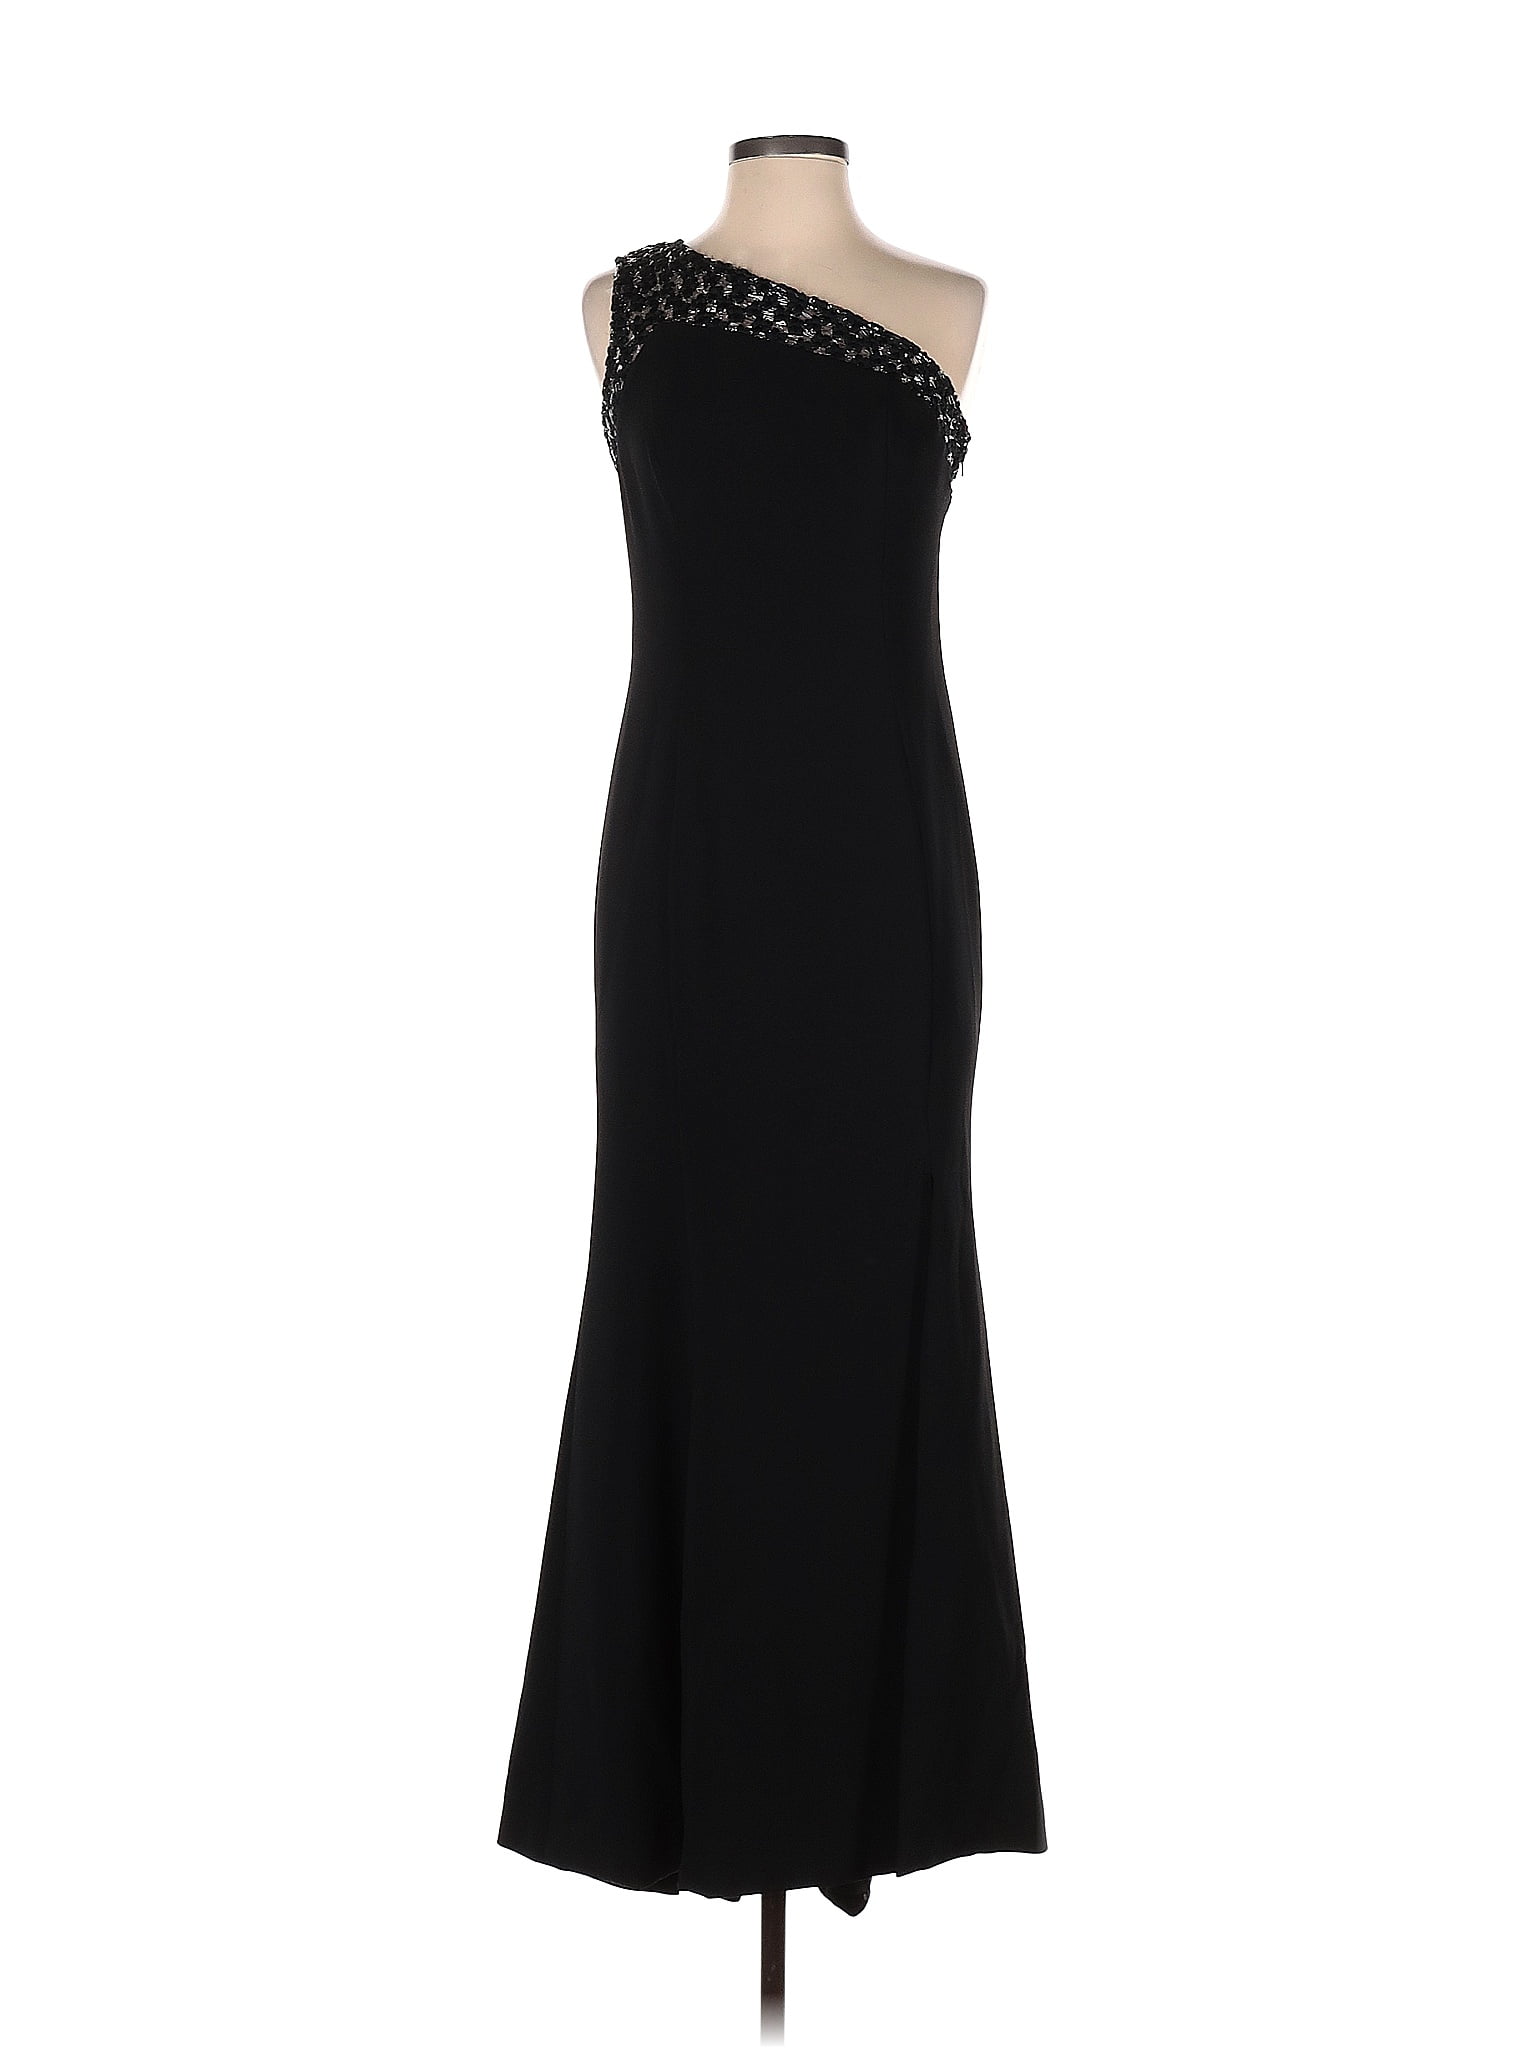 Theia Black Cocktail Dress Size 2 - 77% off | thredUP